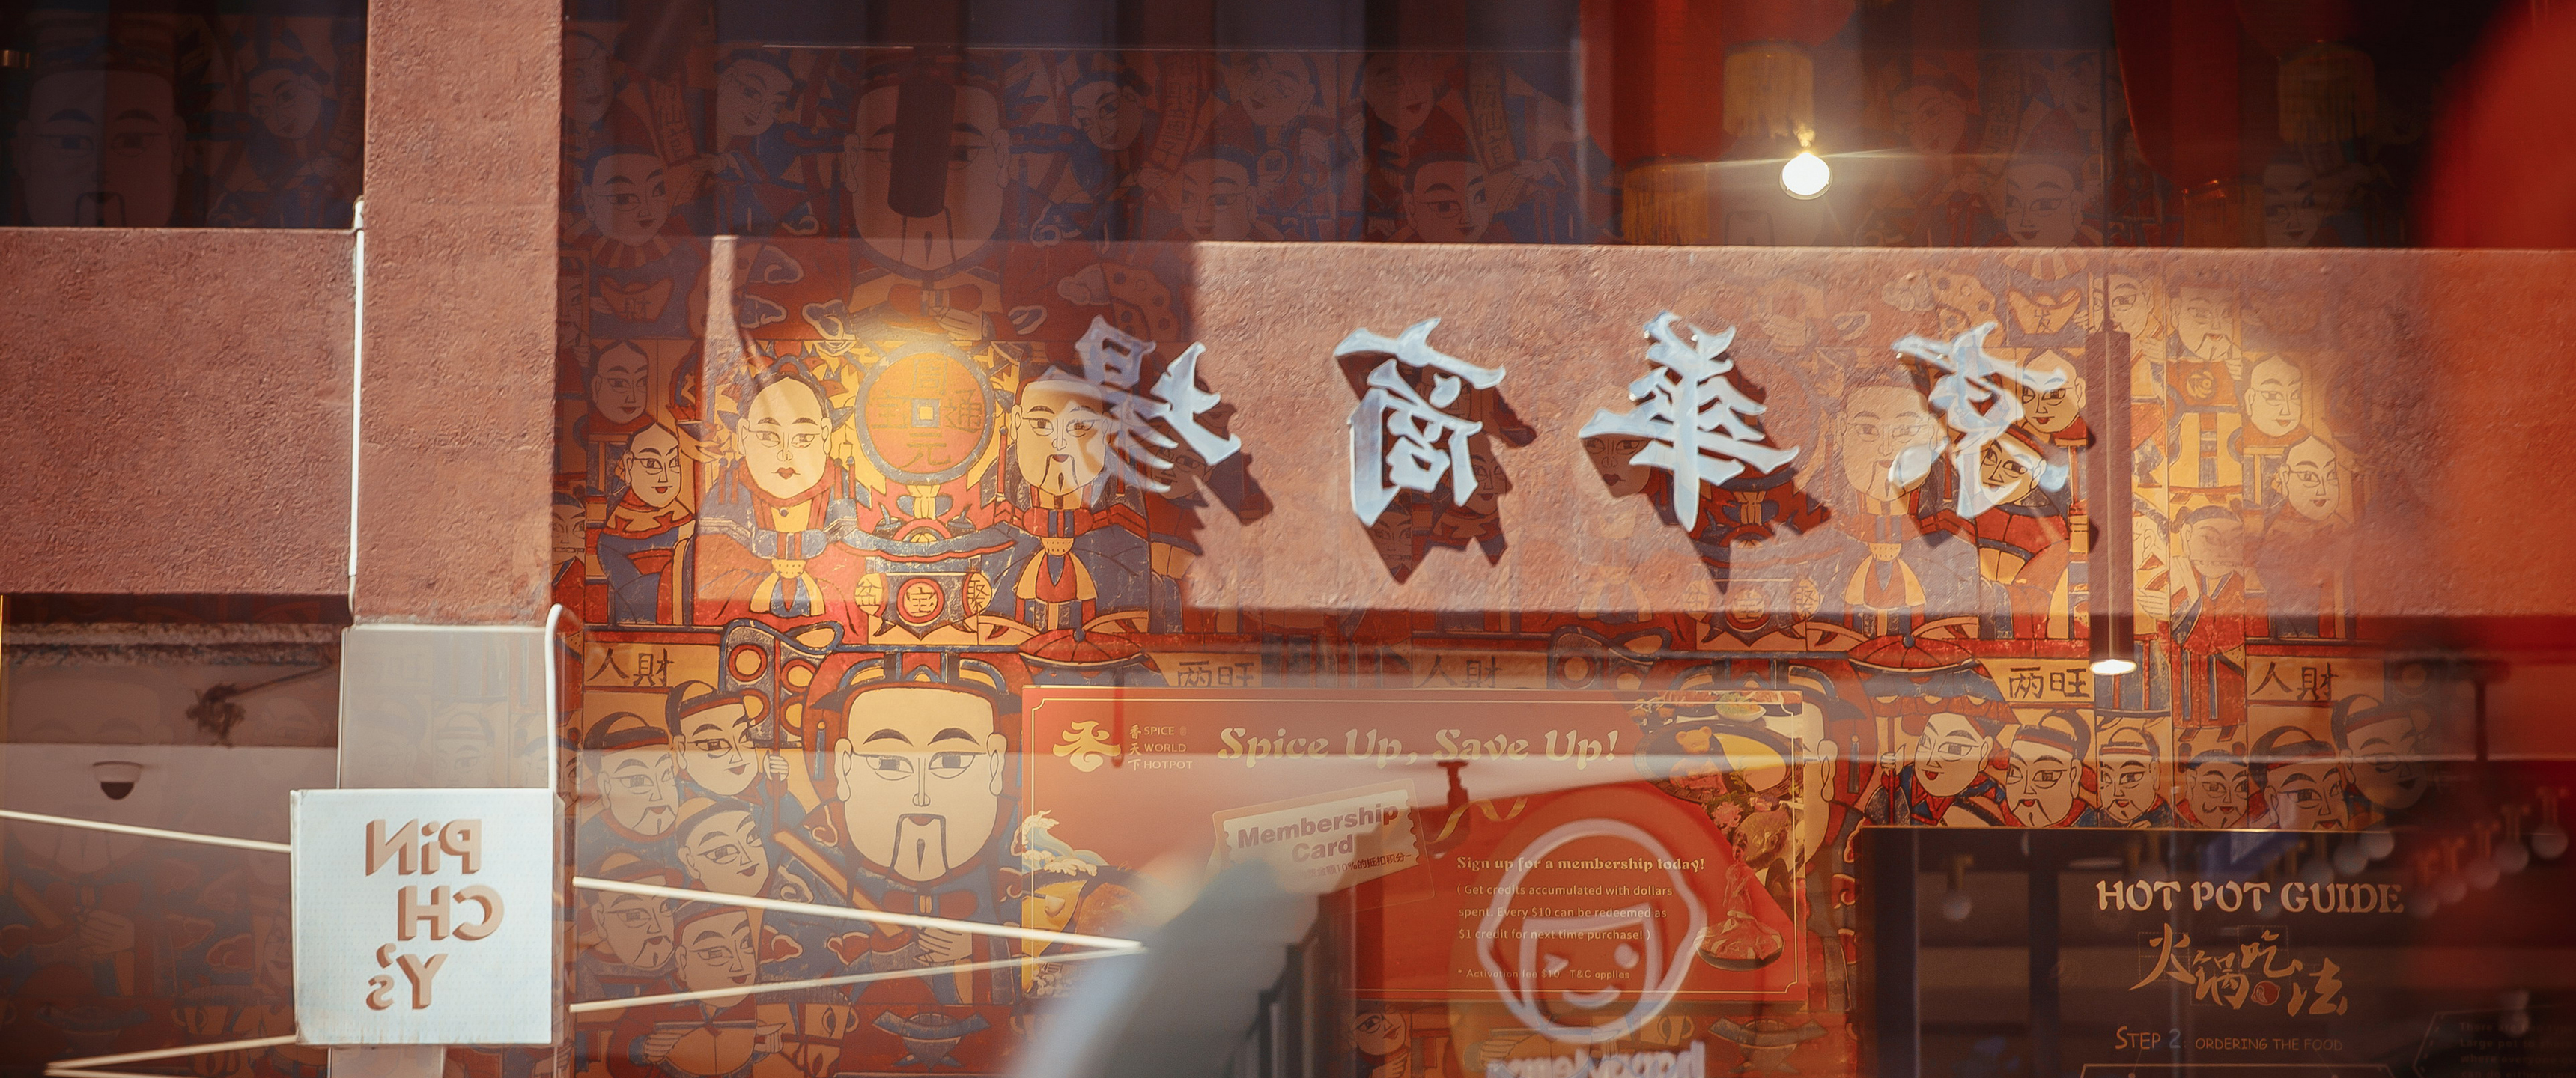 General 3440x1440 Melbourne city building Chinese digital art watermarked kanji